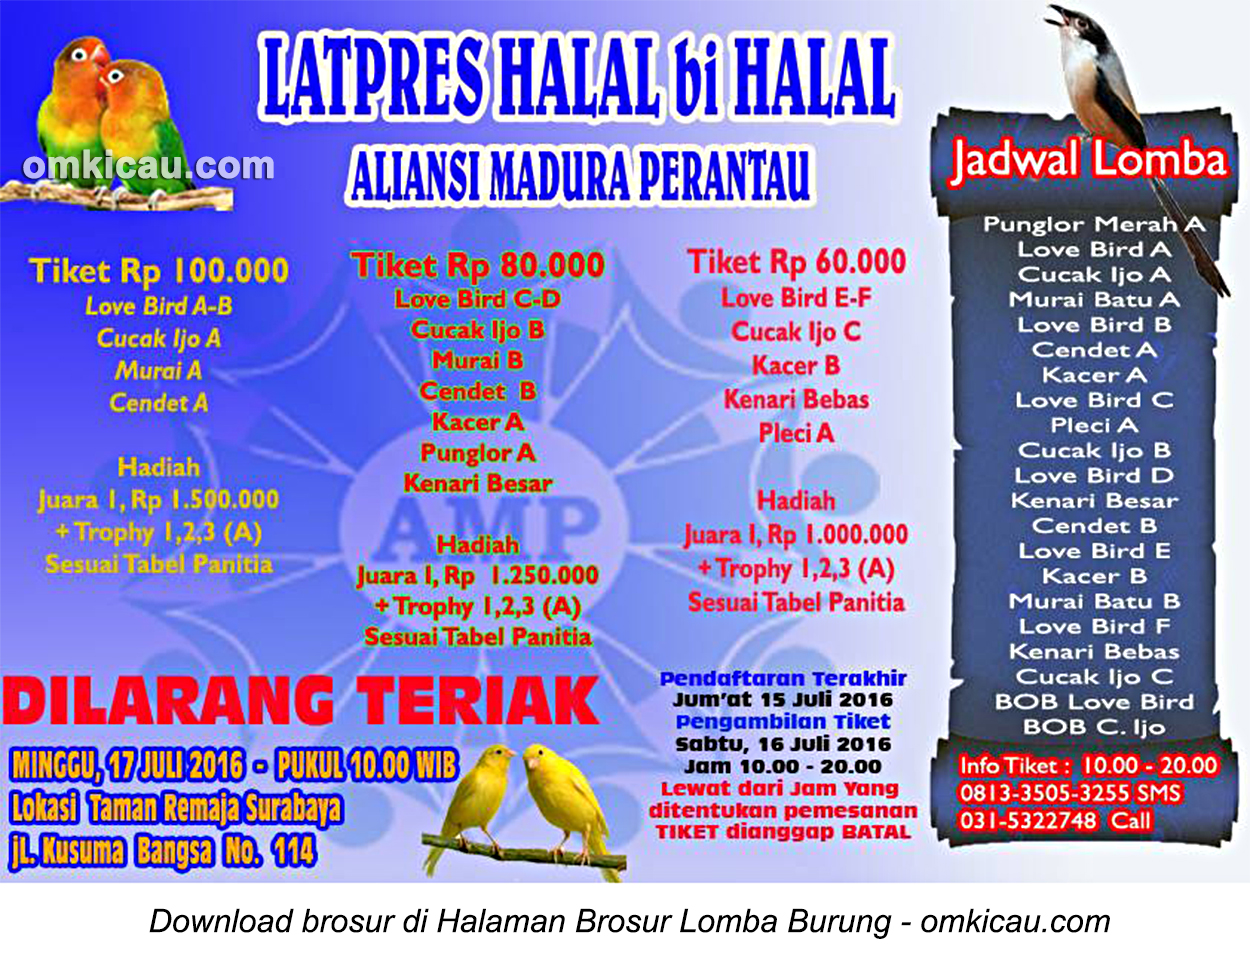 Brosur Latpres Halal Bihalal Aliansi Madura Perantau, Surabaya, 17 Juli 2016